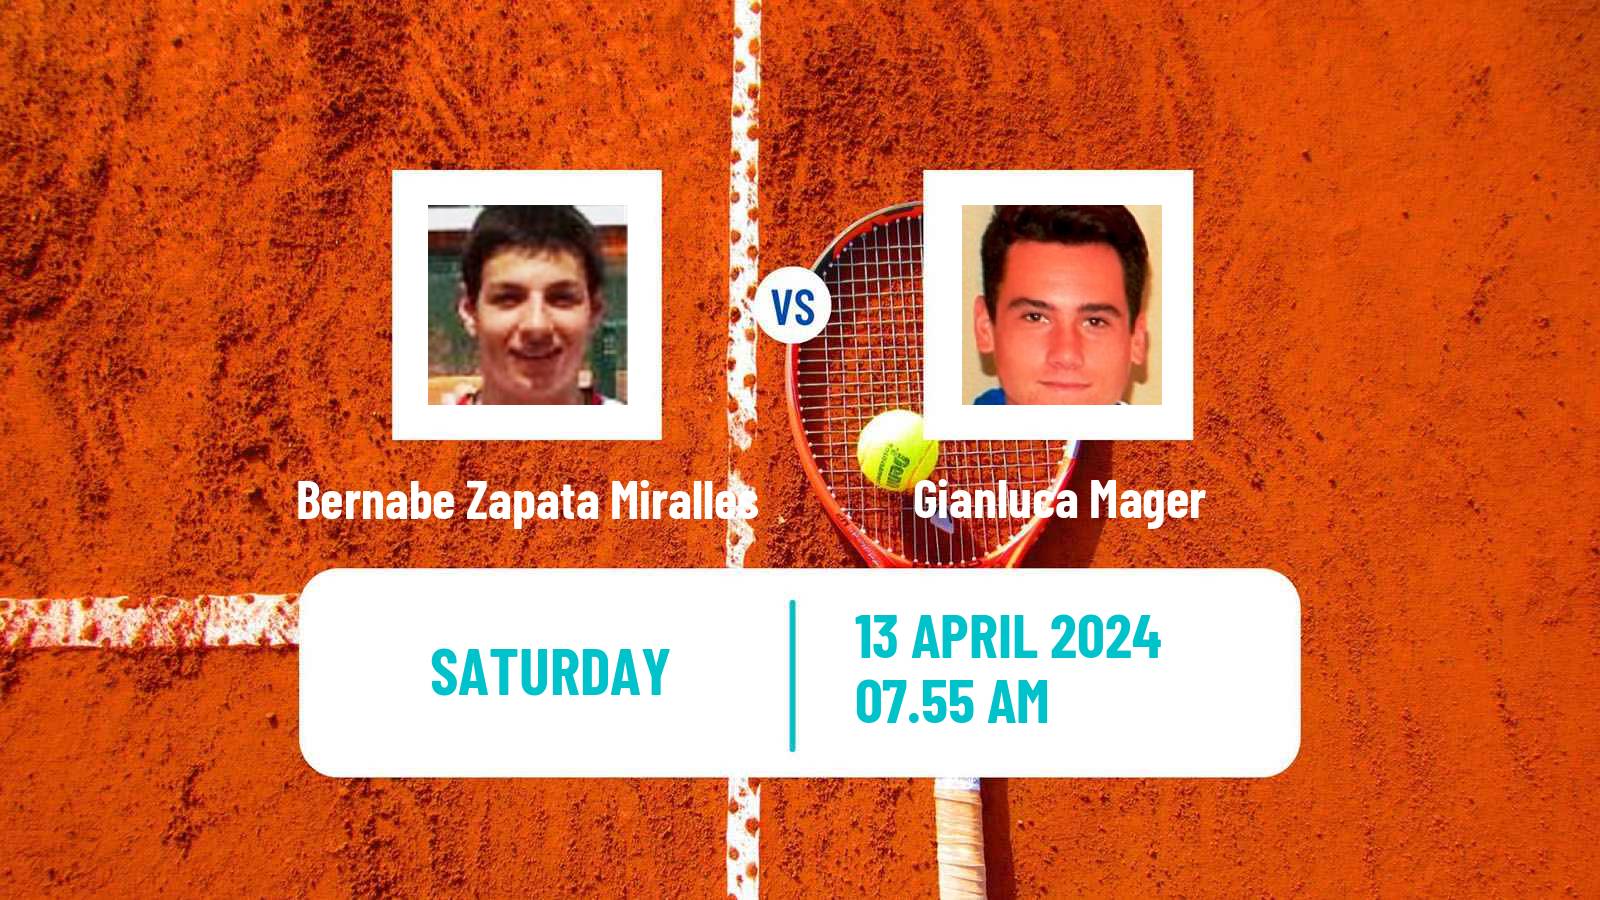 Tennis ATP Barcelona Bernabe Zapata Miralles - Gianluca Mager